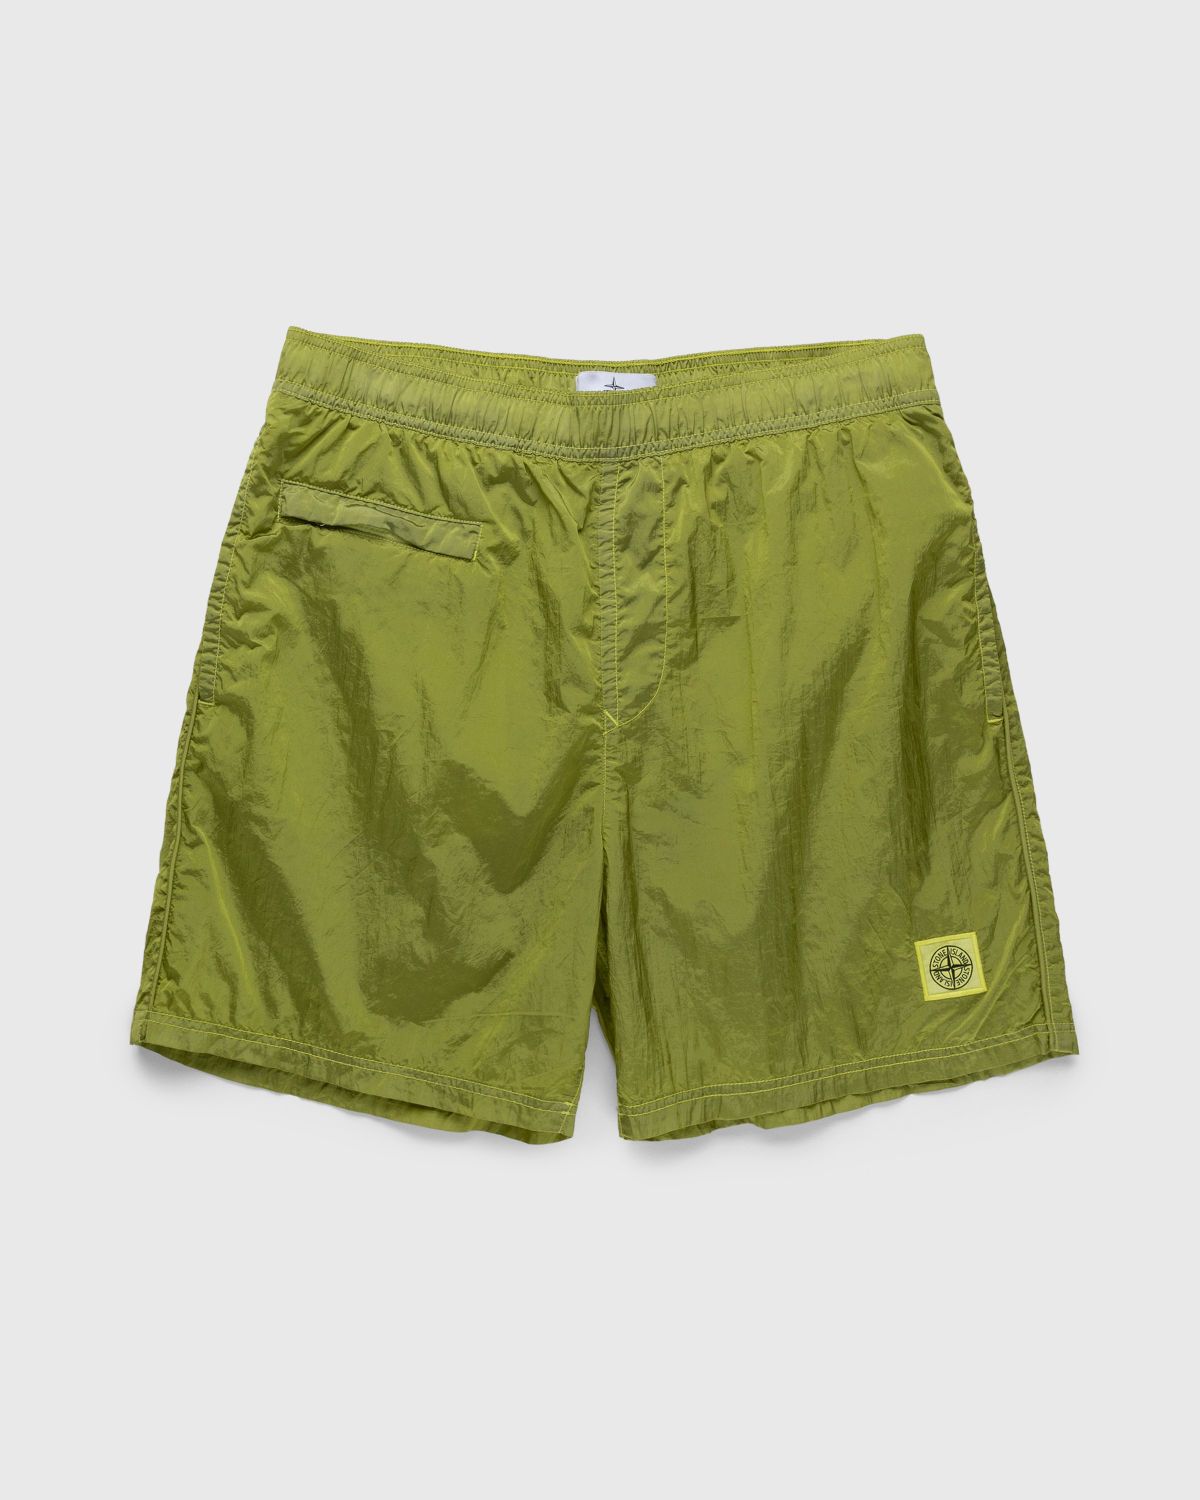 Stone Island – B0243 Nylon Metal Swim Shorts Lemon - Shorts - Yellow - Image 1